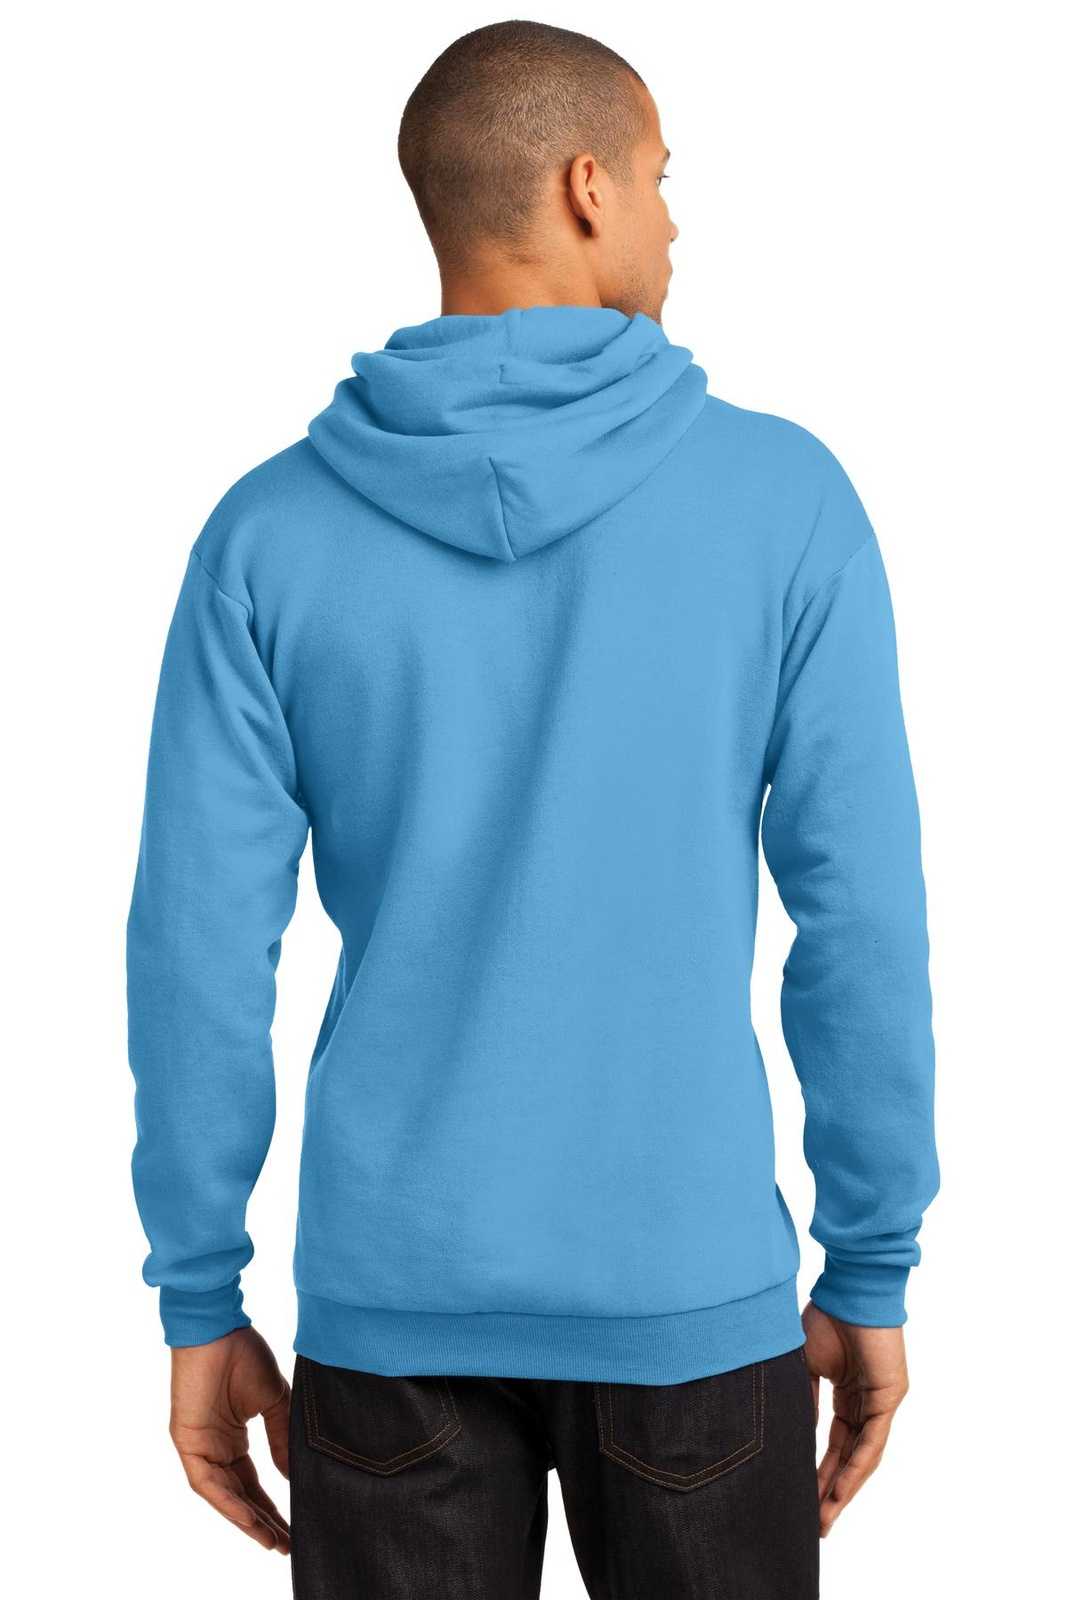 Port &amp; Company PC78H Core Fleece Pullover Hooded Sweatshirt - Aquatic Blue - HIT a Double - 2